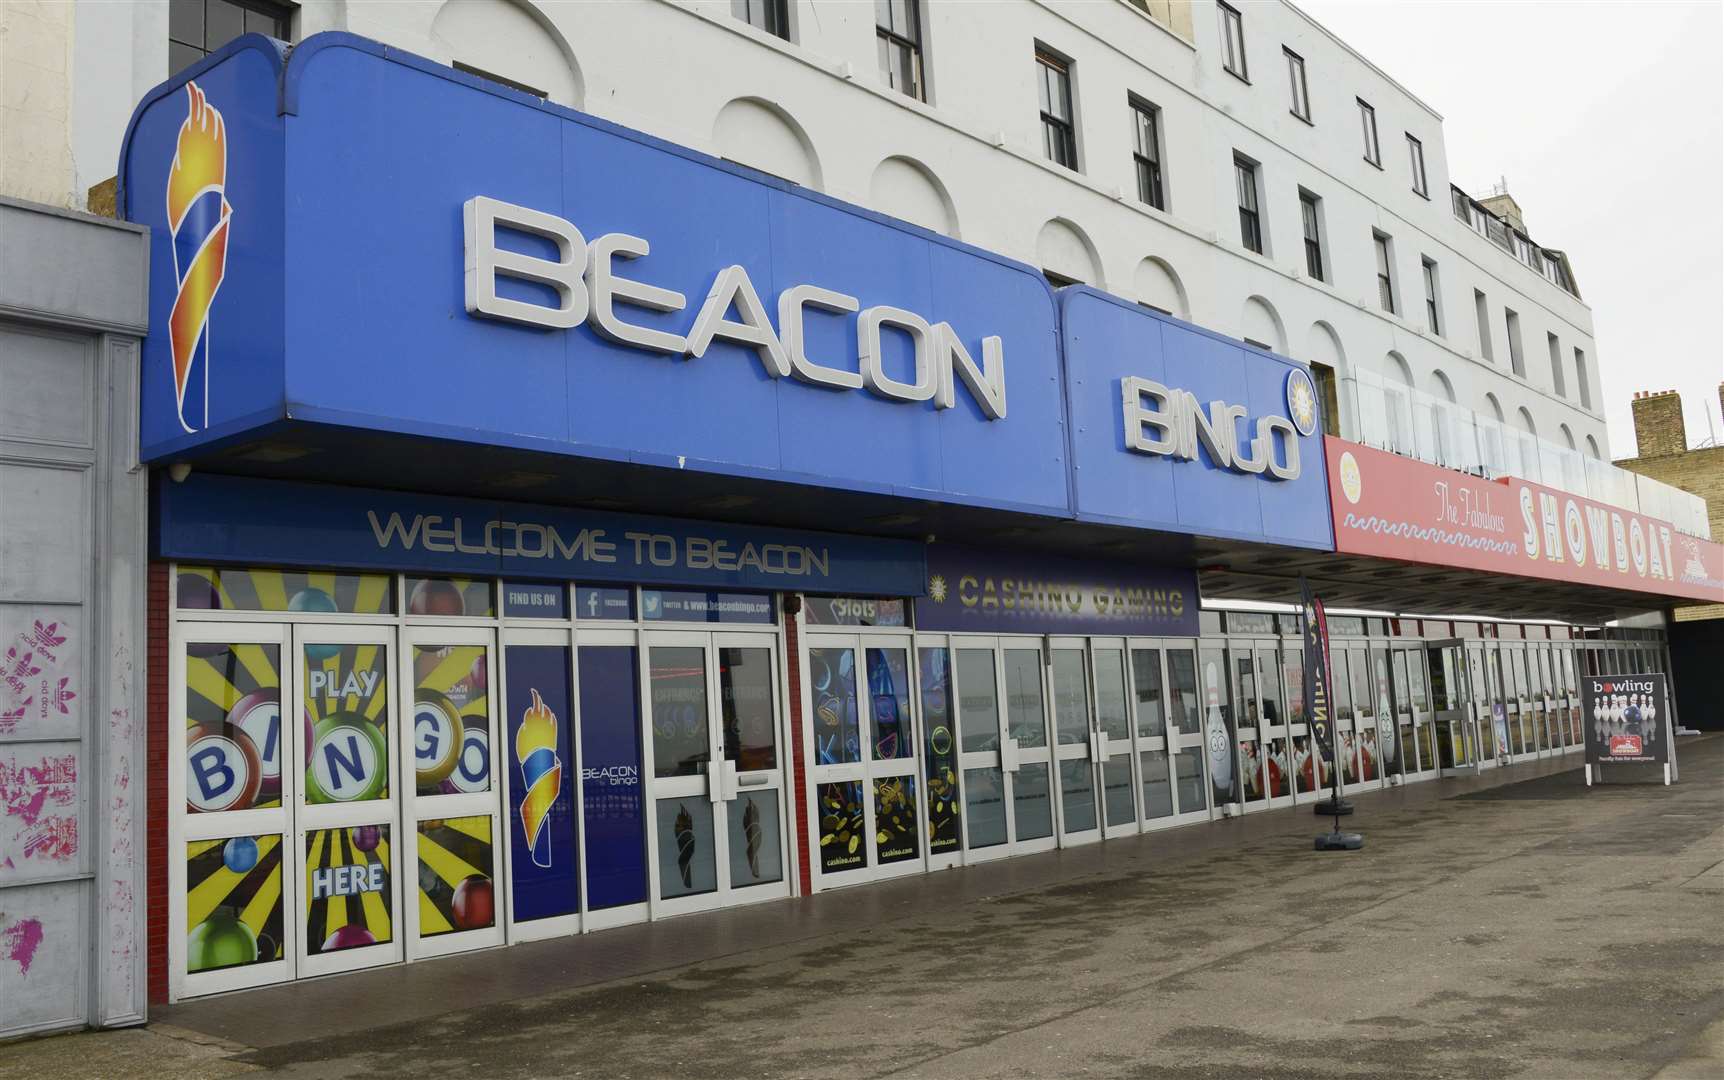 Margate Beacon Bingo is now shut